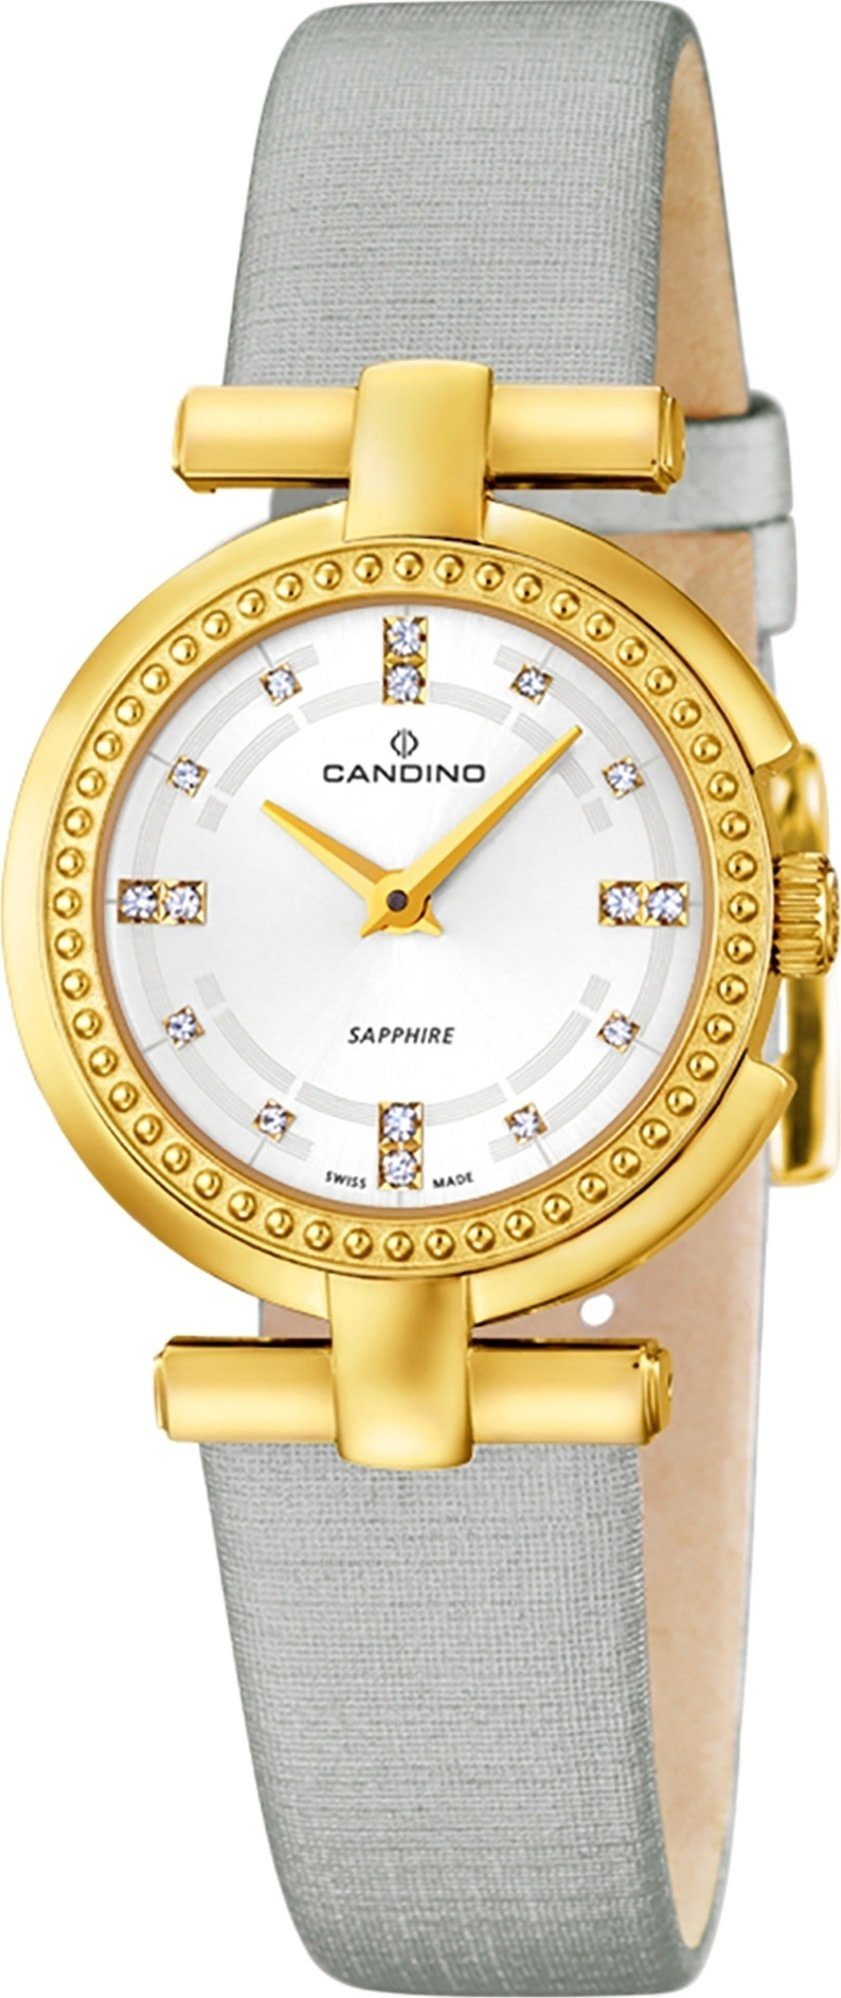 Candino Quarzuhr Candino Damen Uhr Analog C4561/1, Damen Armbanduhr rund, Leder/Textilarmband grau, Fashion